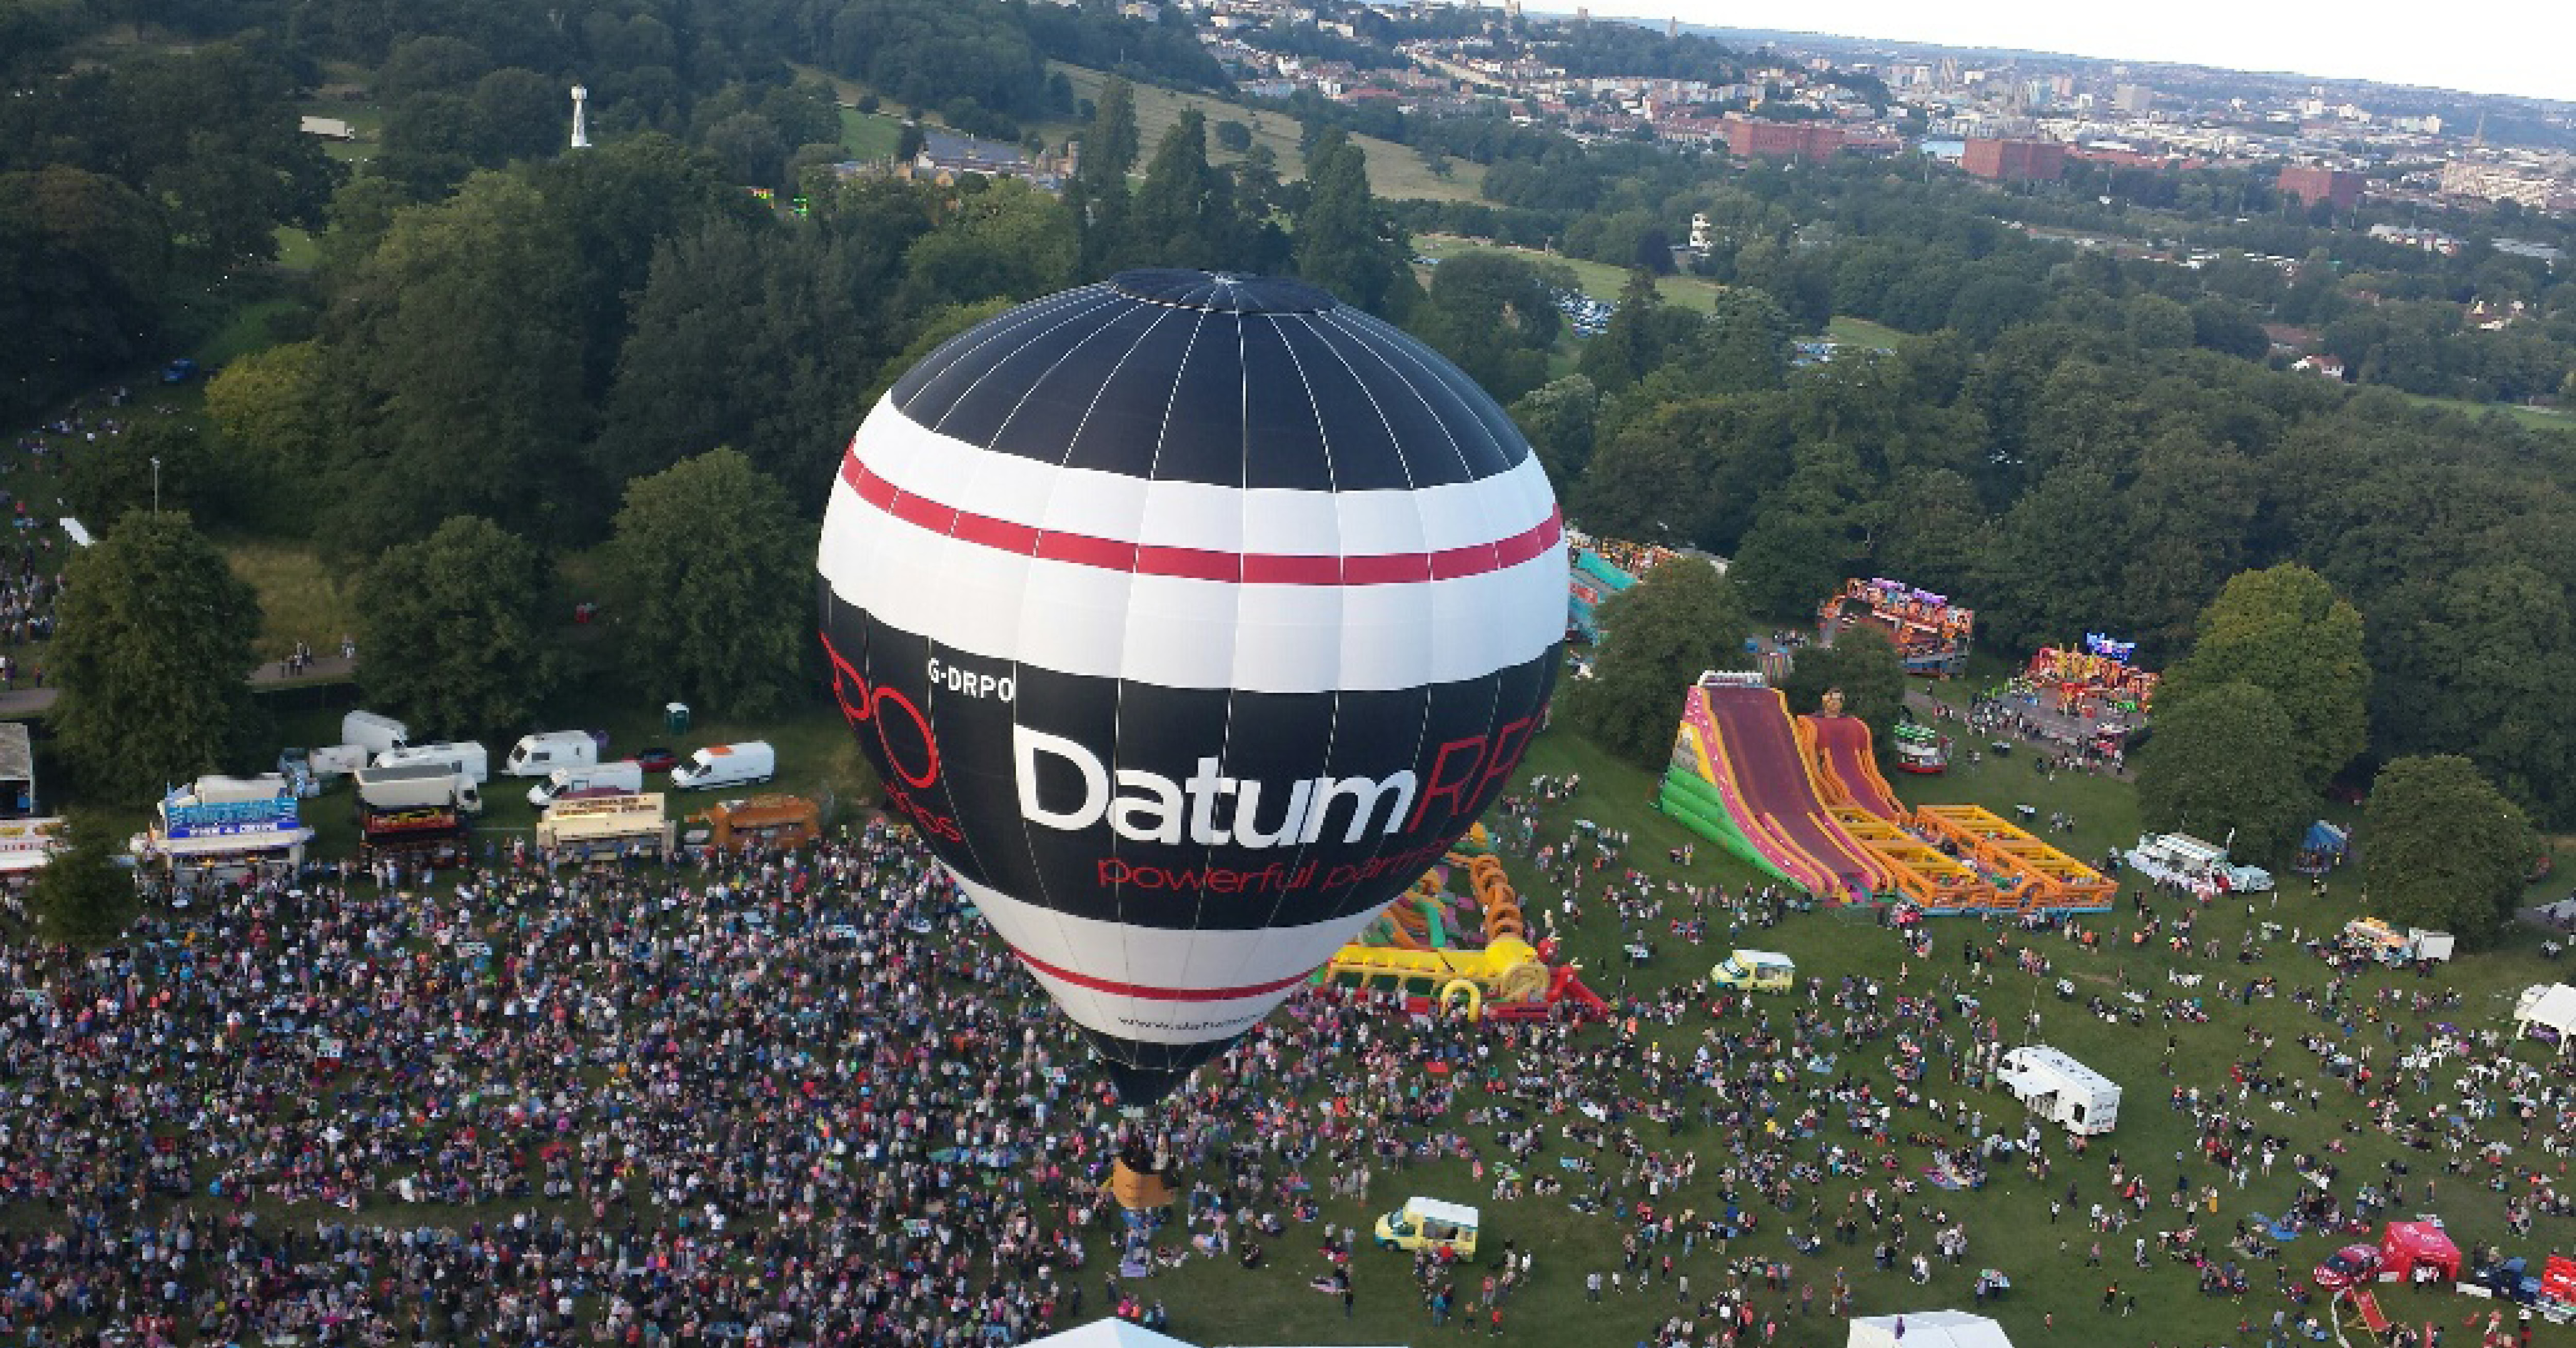 balloon fiesta event